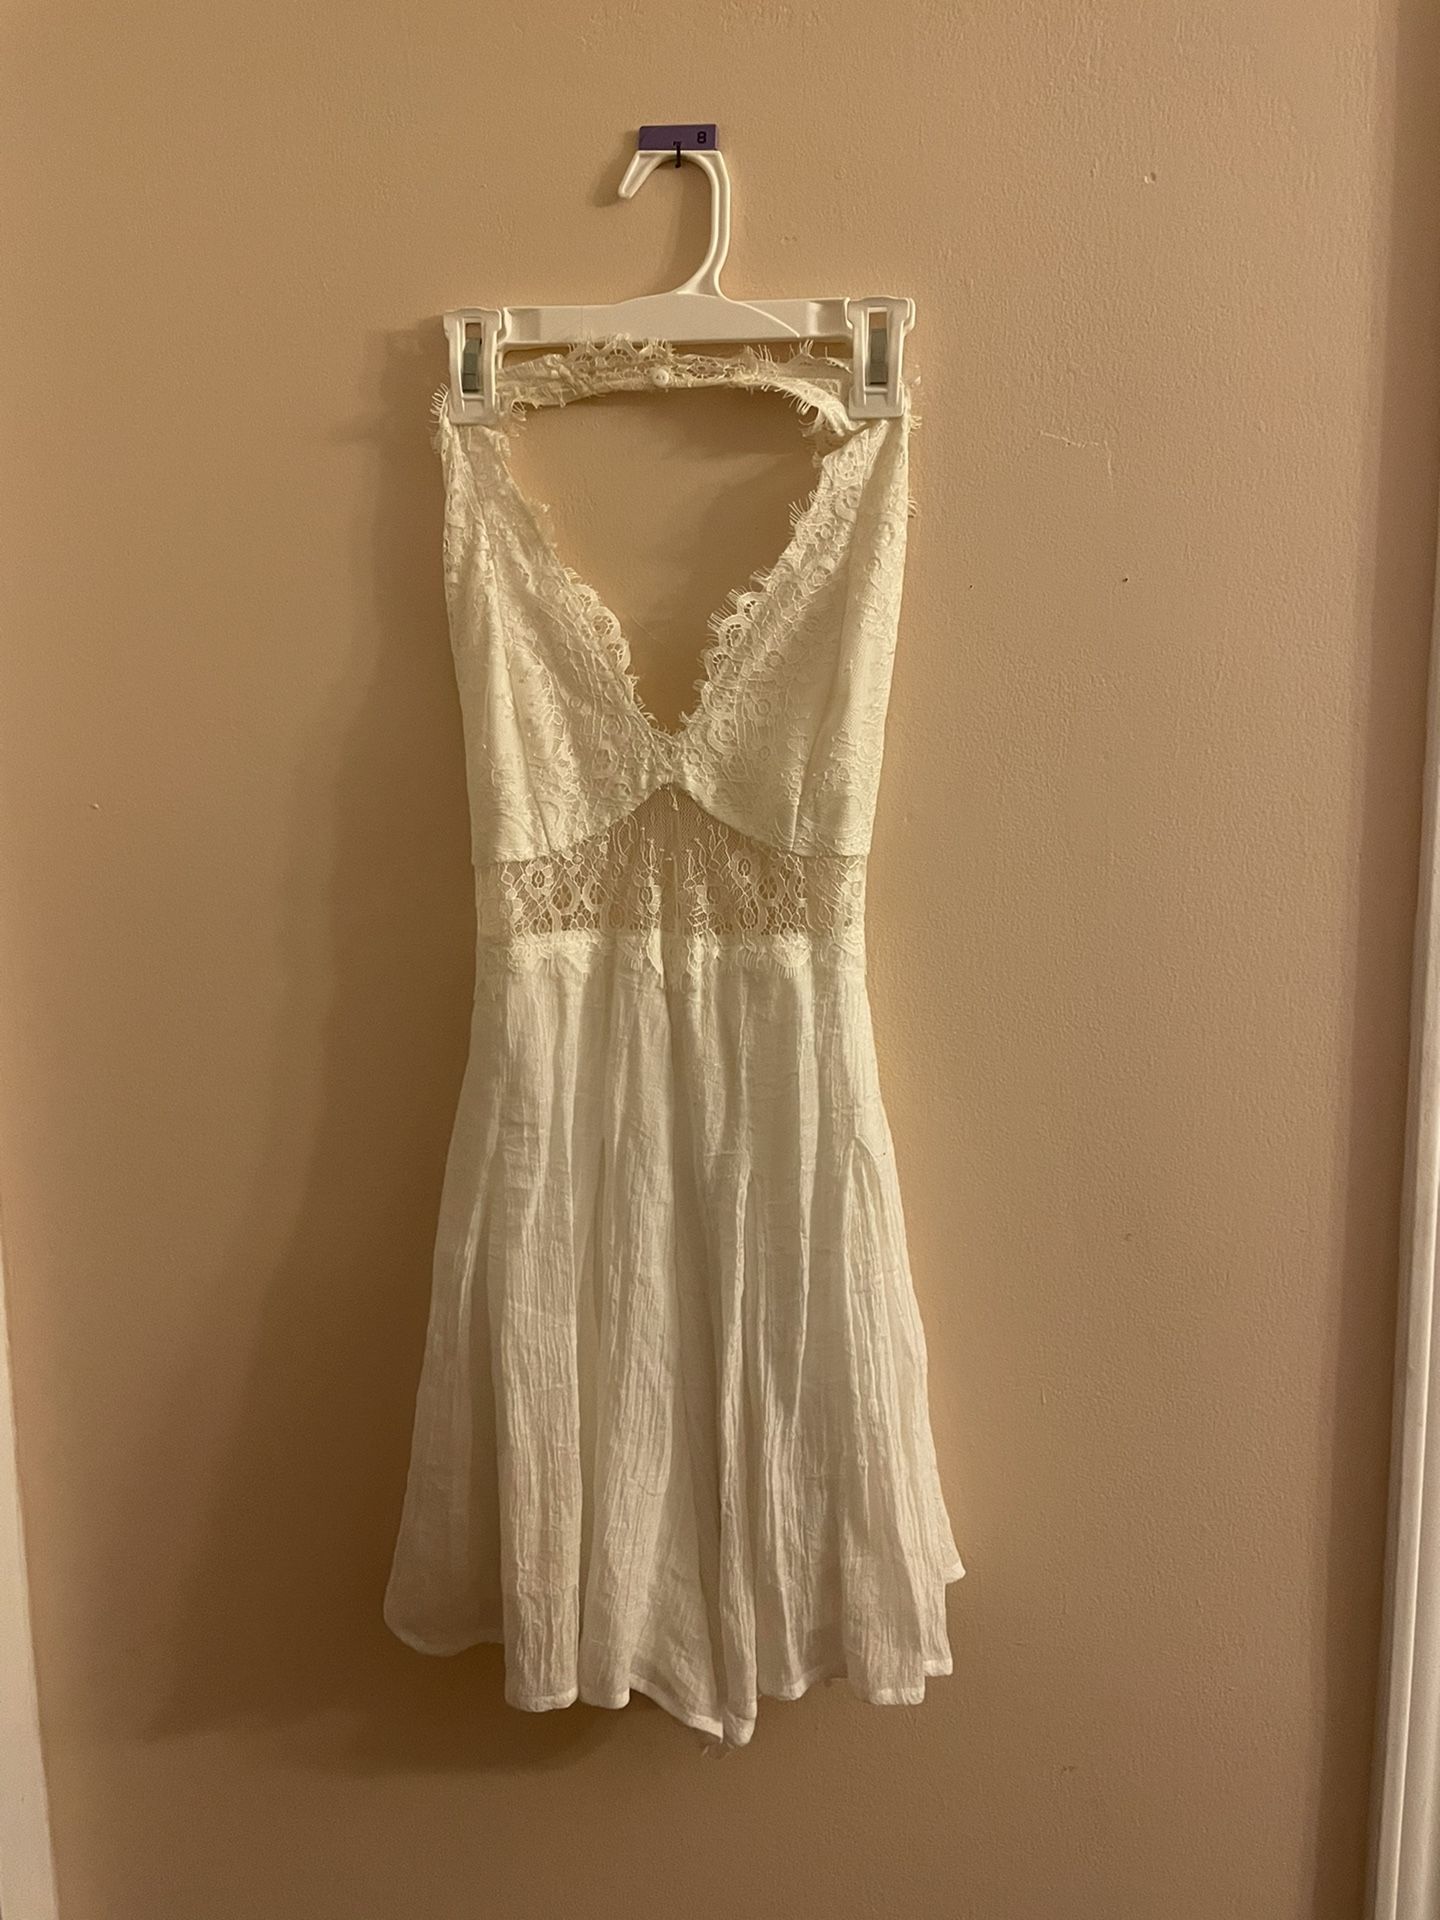 White Lace Romper/dress